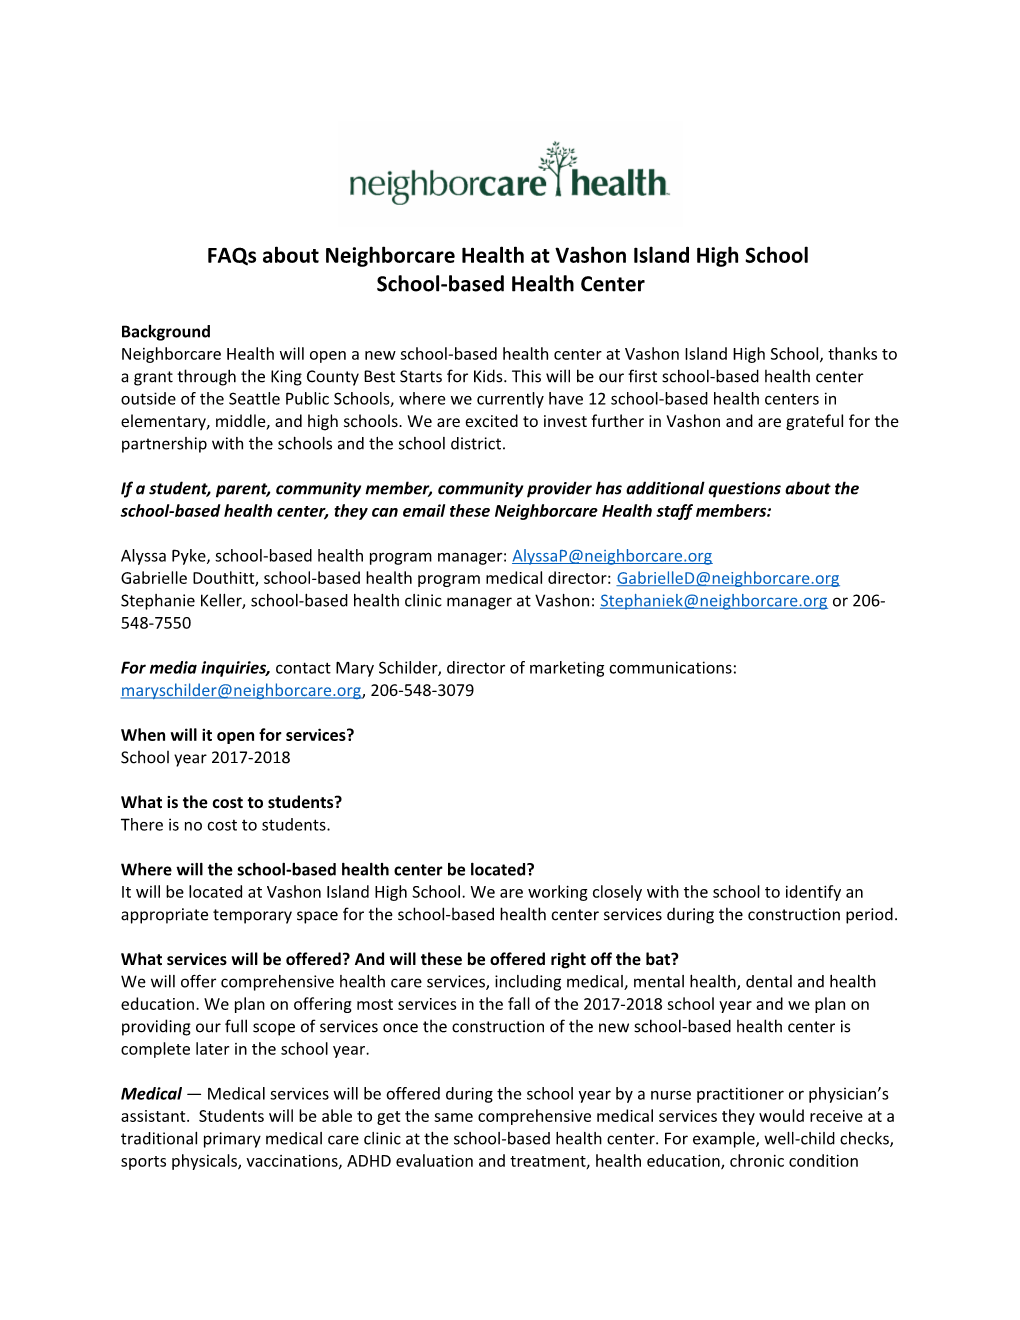 Faqs About Neighborcare Health at Vashon Island High School